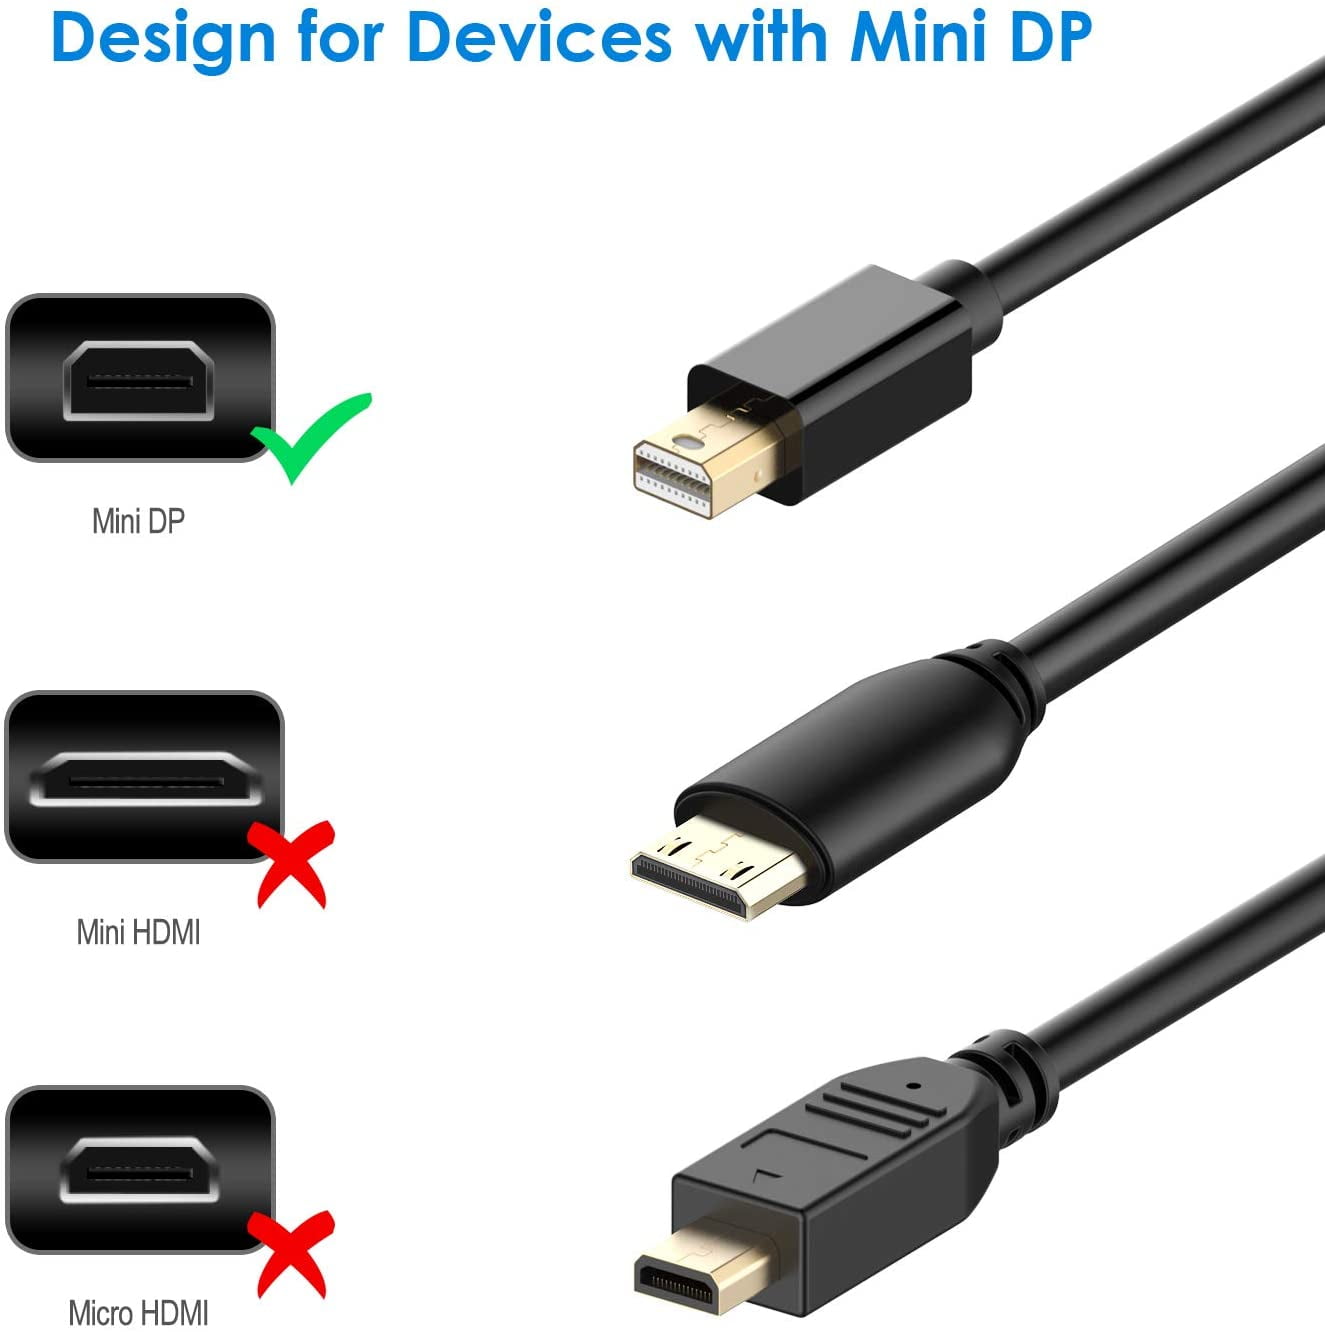 Rankie Mini (Mini DP) to HDMI Cable, 4K Ready, 15 Feet Walmart.com